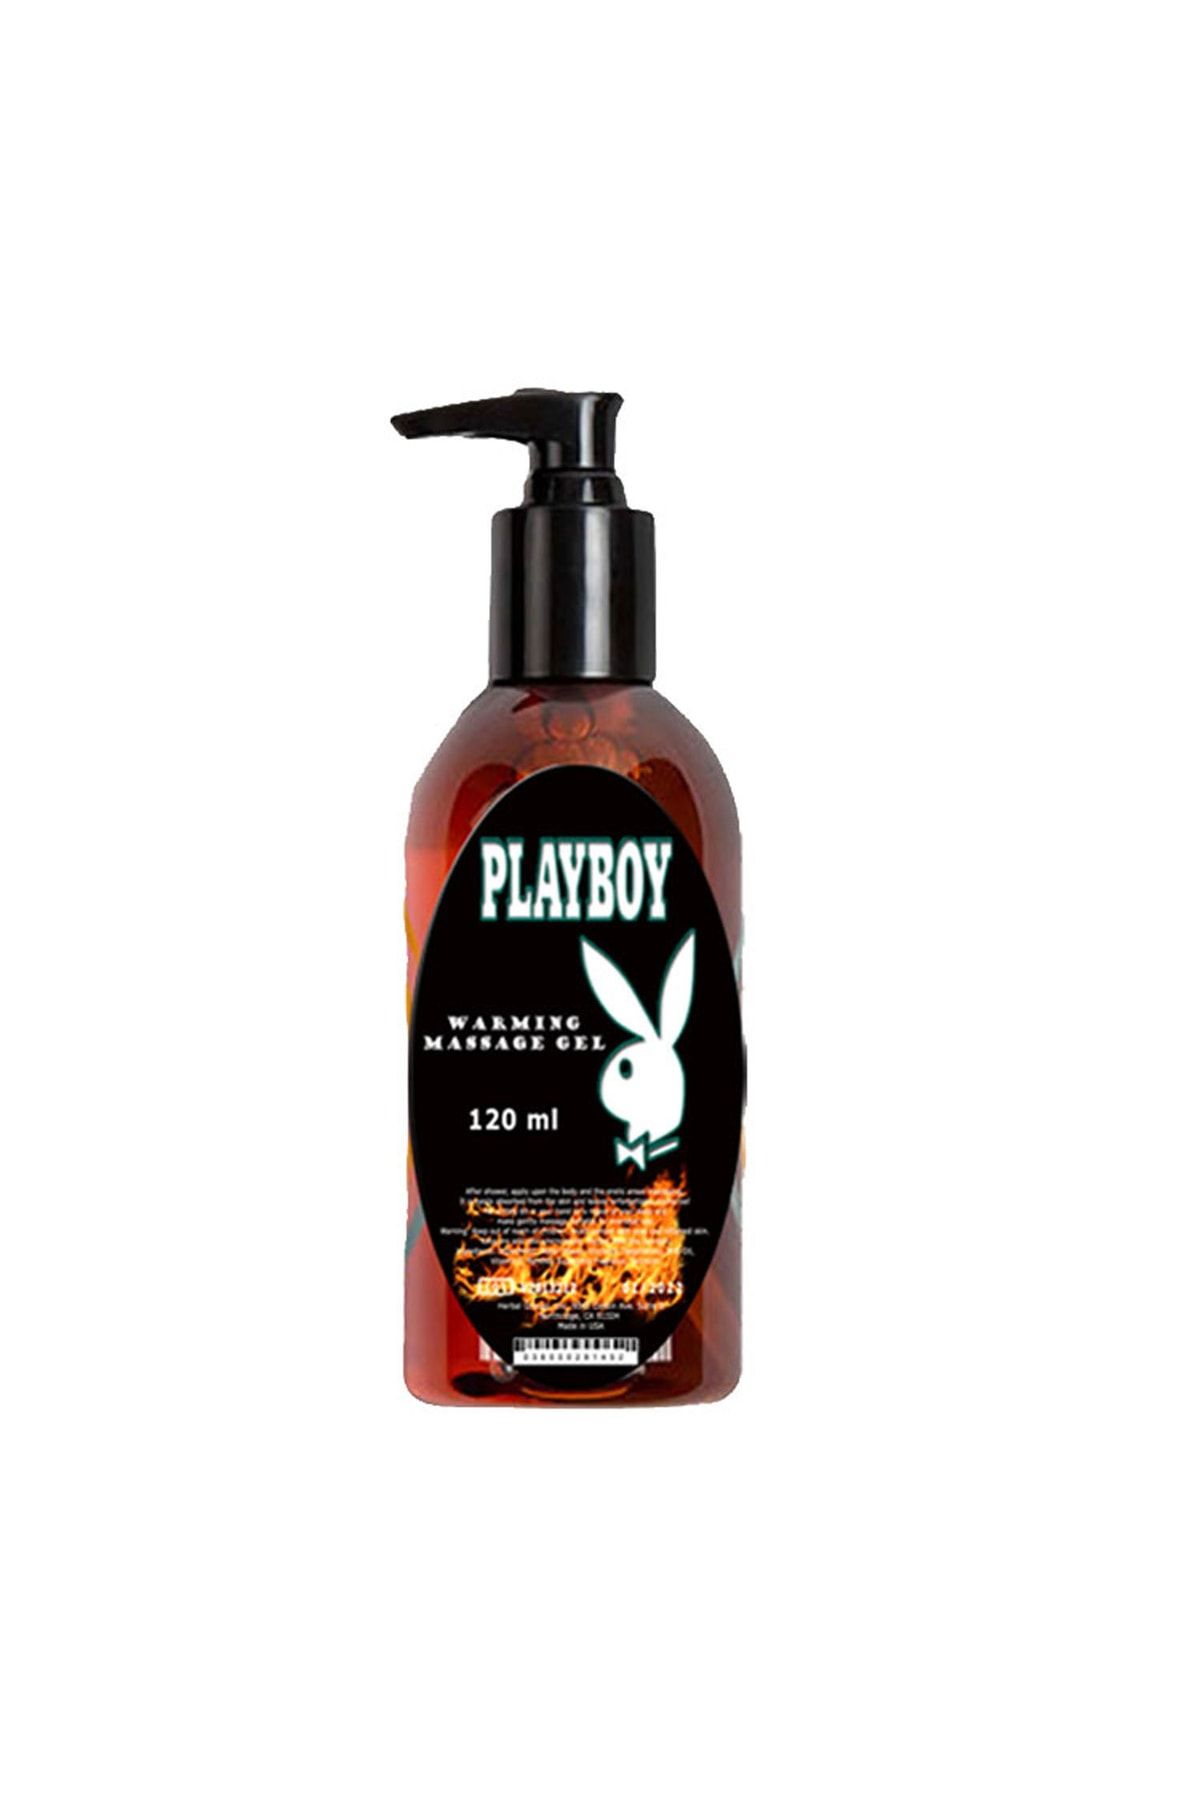 Playboy Masaj Yağı Isıtıcı Aromaterapi 120ml Warming Massage Oil 120ml